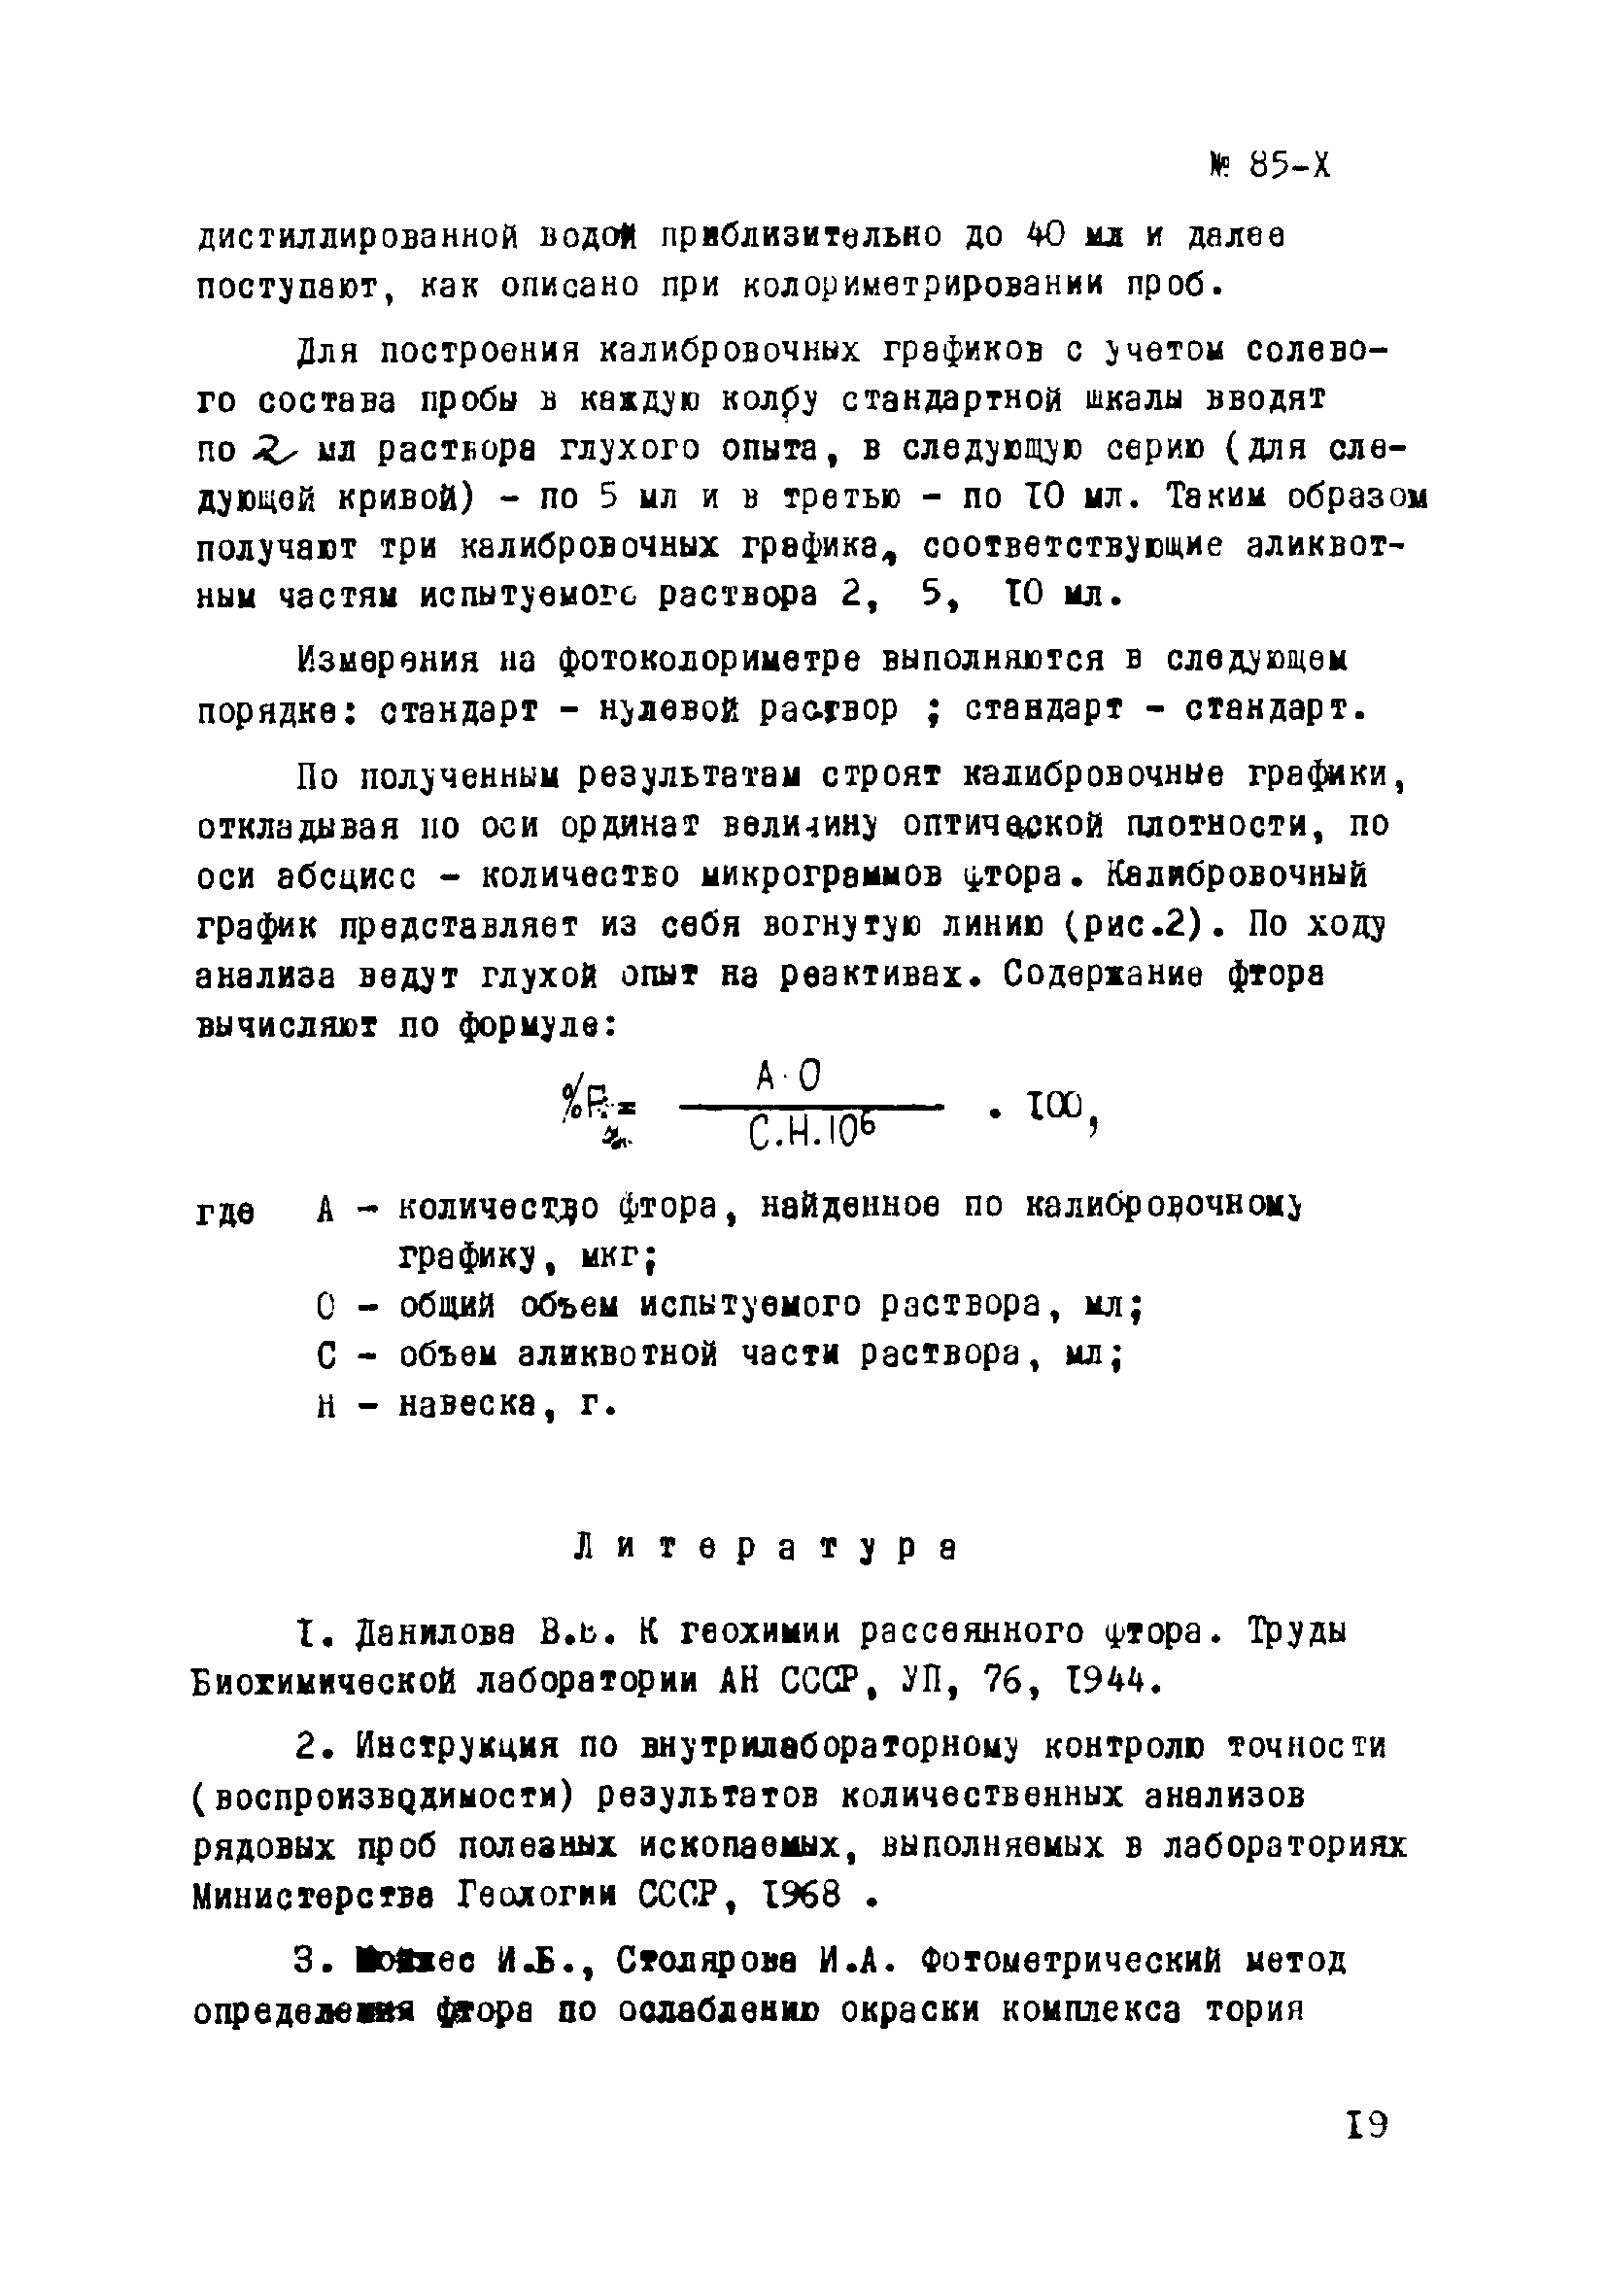 Инструкция НСАМ 85-Х